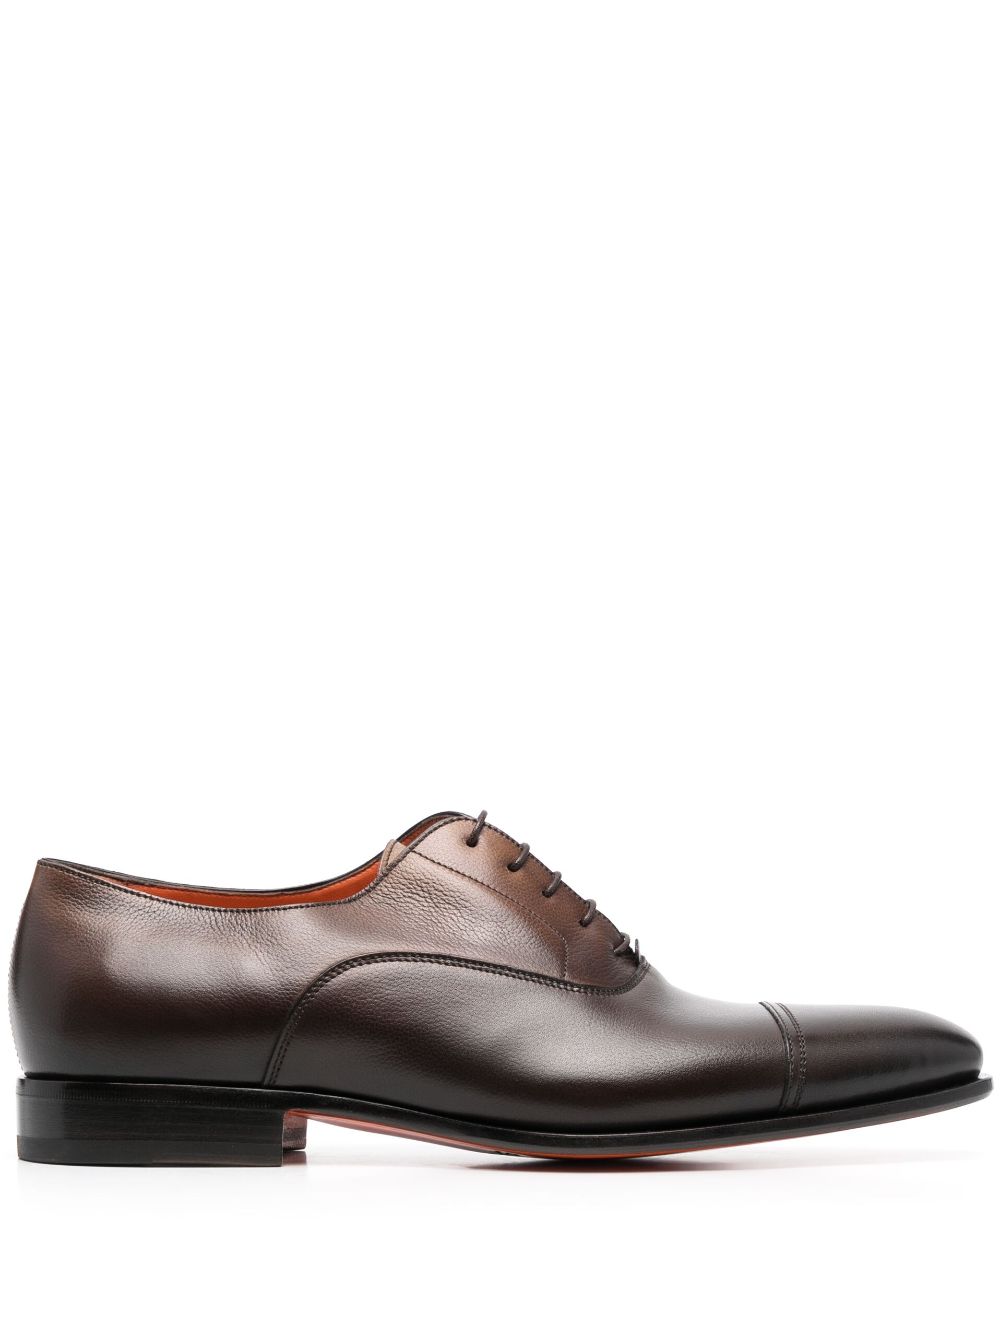 Santoni gradient-effect leather oxford shoes - Brown